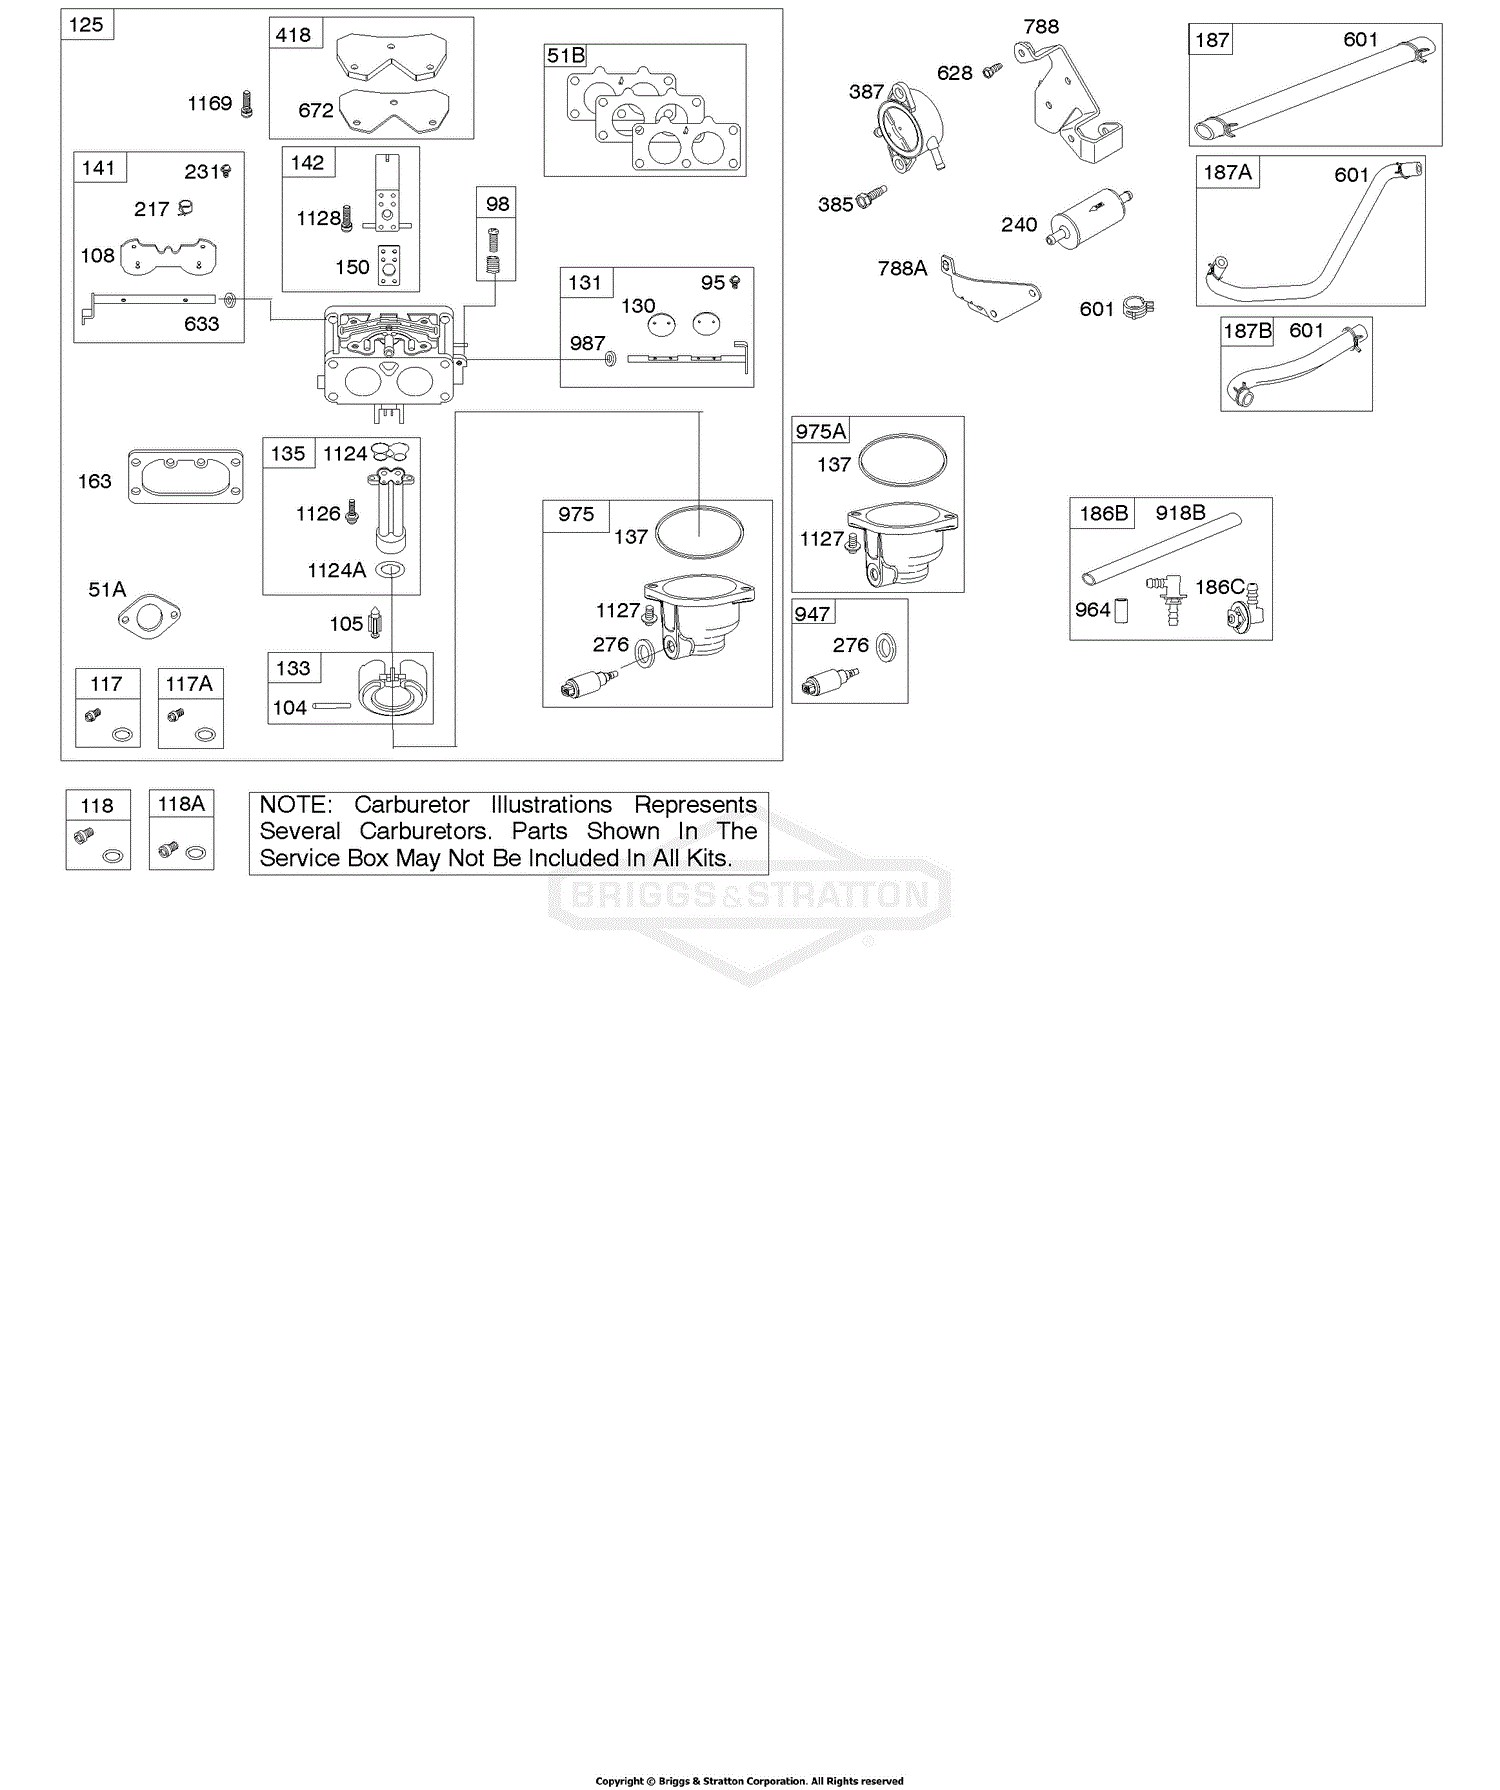 Wiring Diagram Model 44m777 B&amp;s Briggs and Stratton 44m777 0174 G5 Parts Diagram for Carburetor Fuel Supply Of Wiring Diagram Model 44m777 B&amp;s